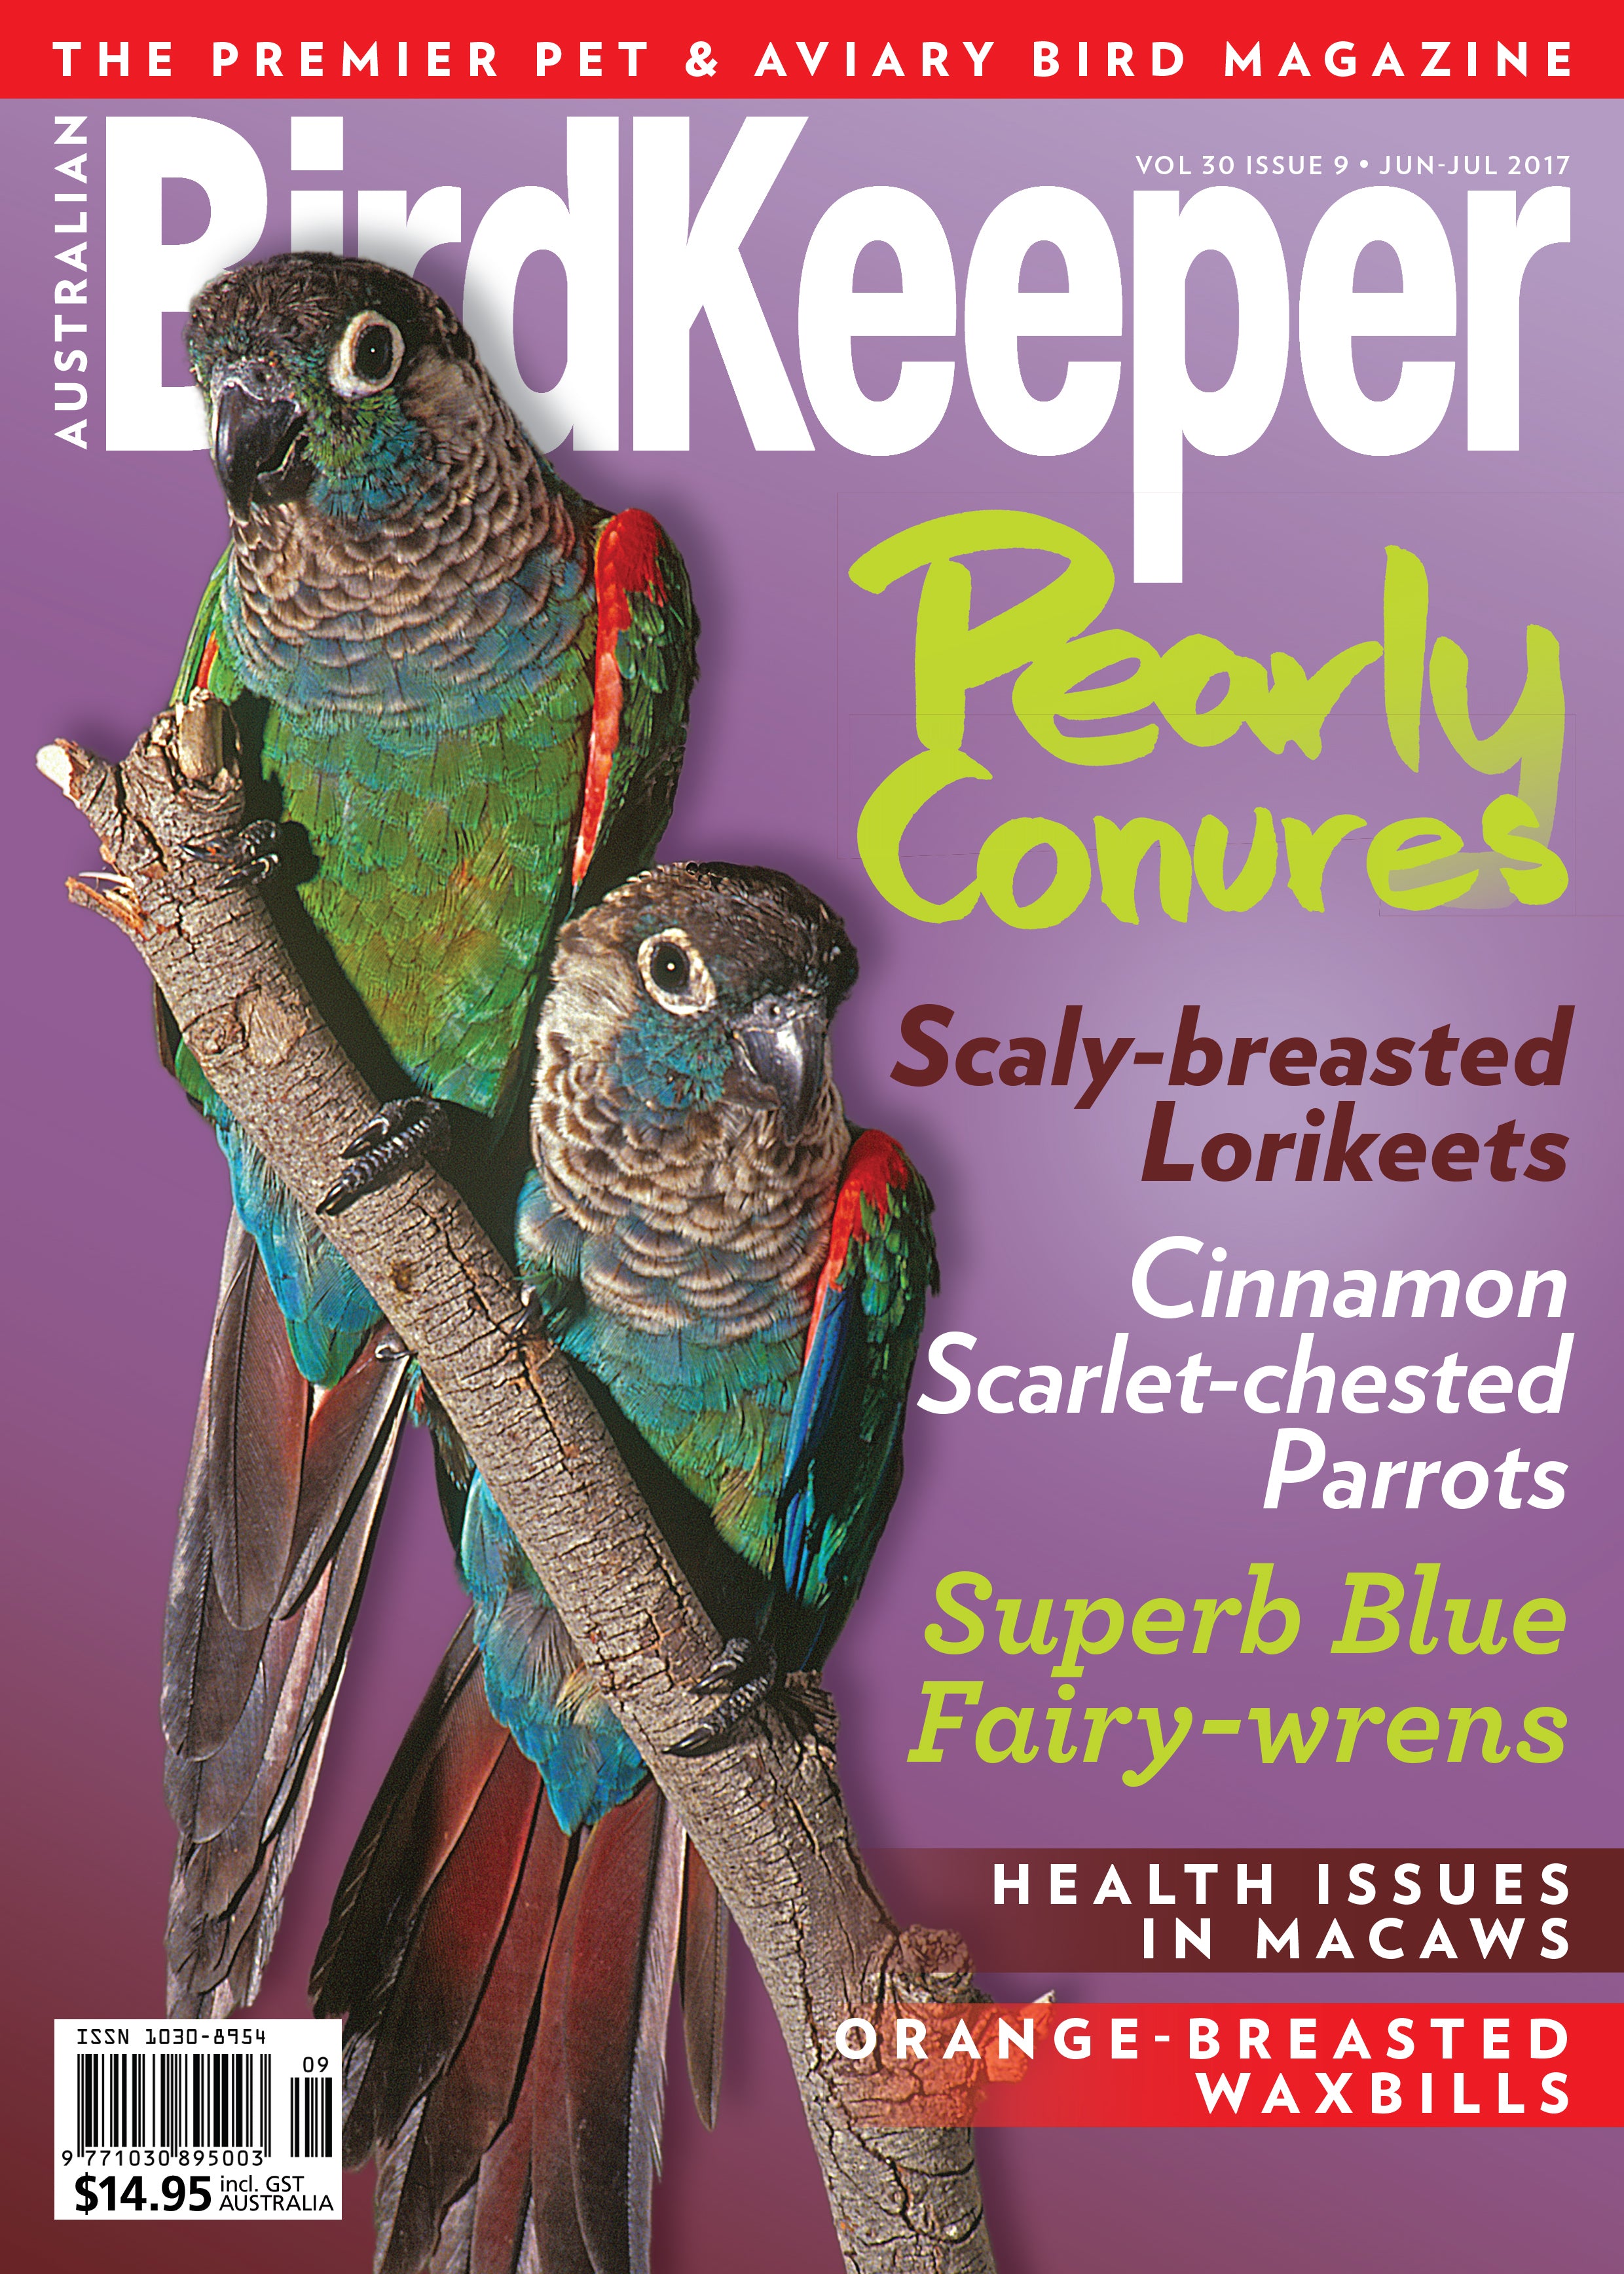 Australian BirdKeeper Magazine Vol 30 Iss 9